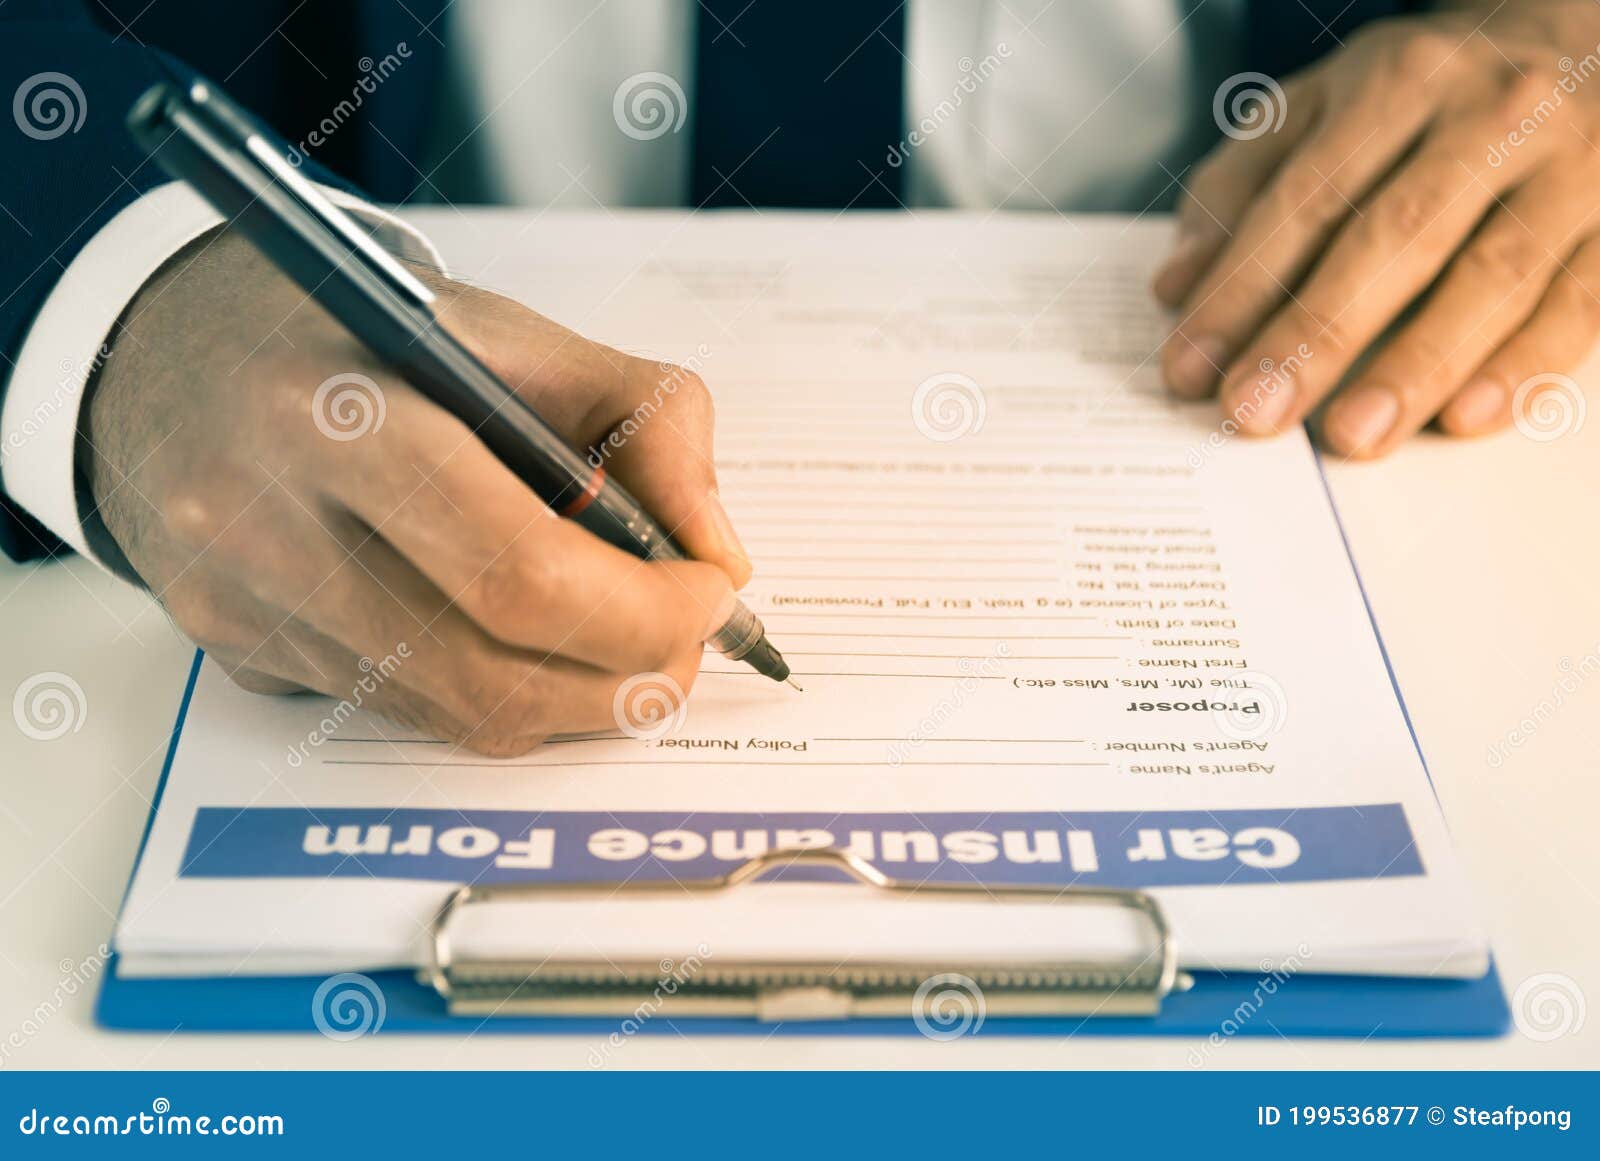 Zoom Insurance Agent Hand Writing Car Insurance Claim